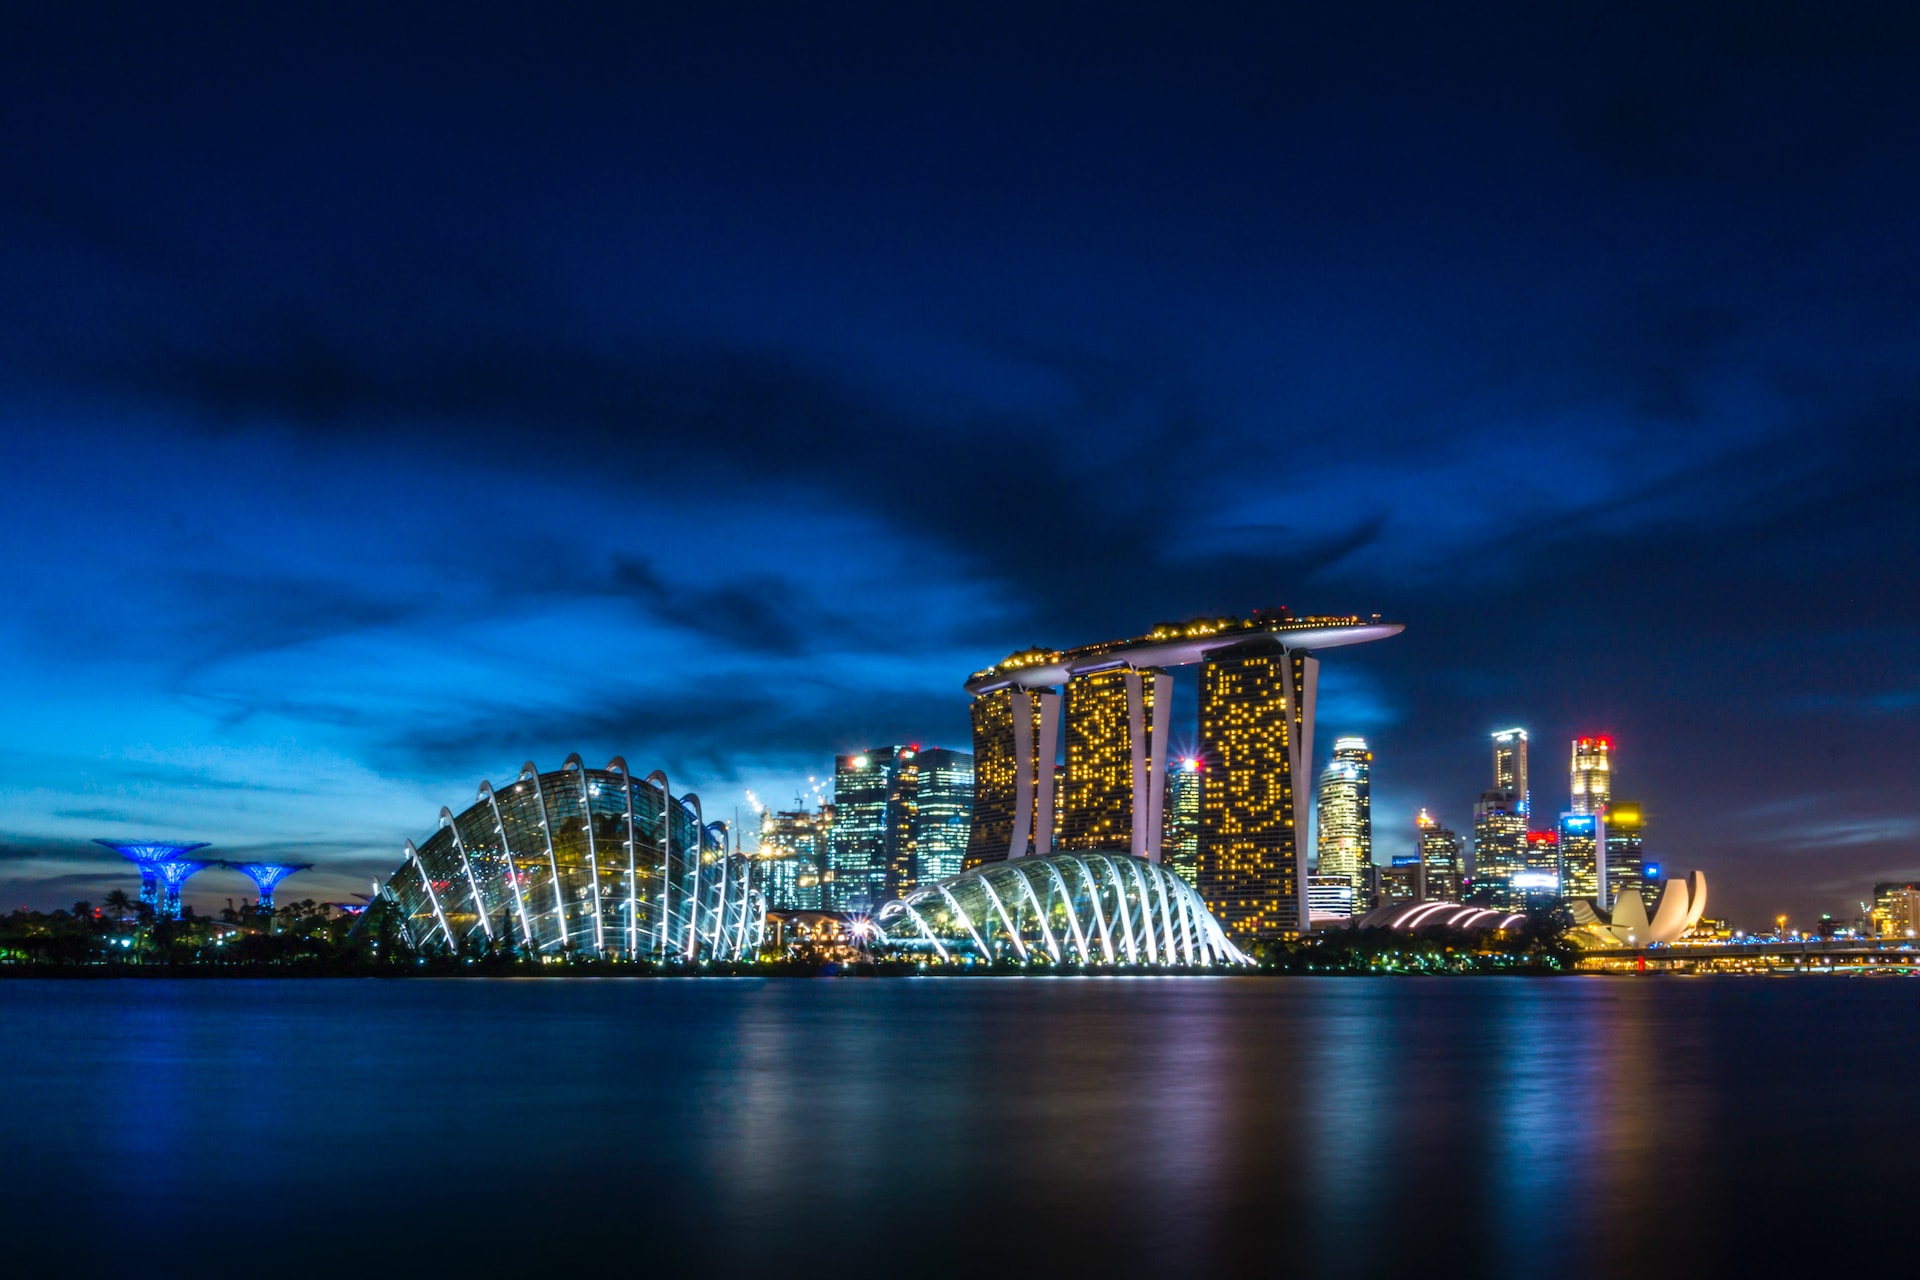 Singapore Still World's Top Maritime Hub